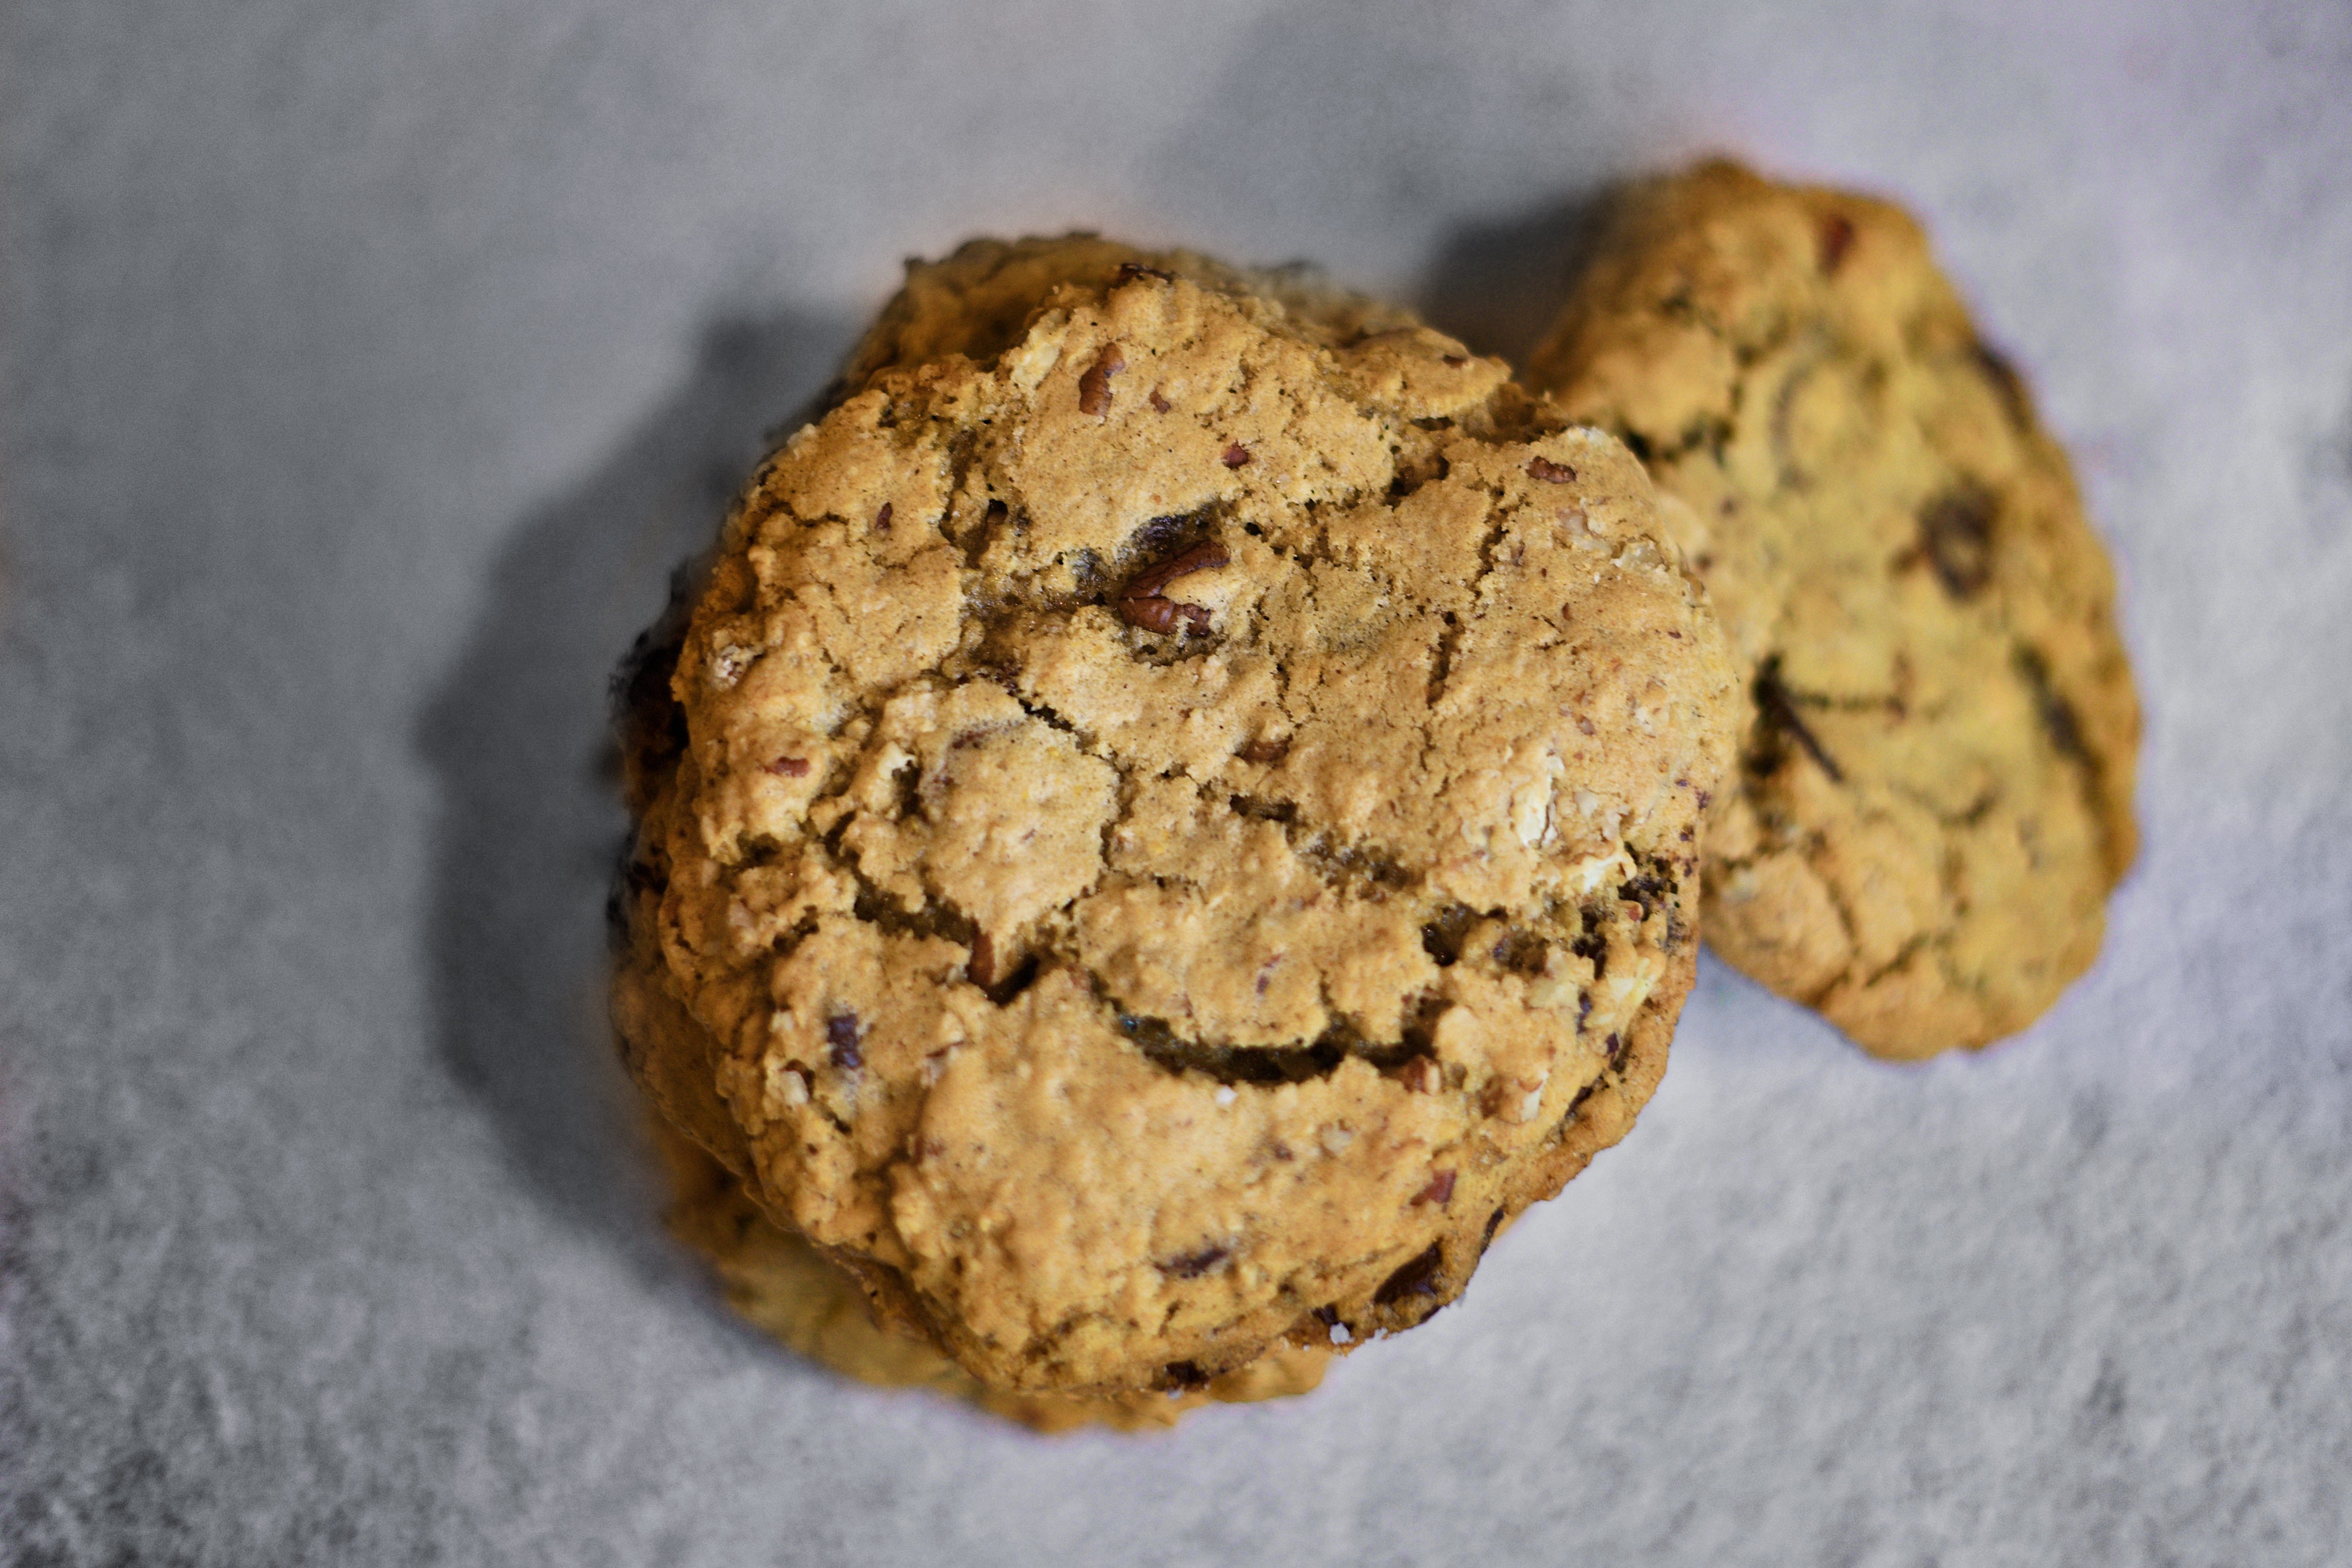 David Ingraham's perfect chocolate chip cookies.